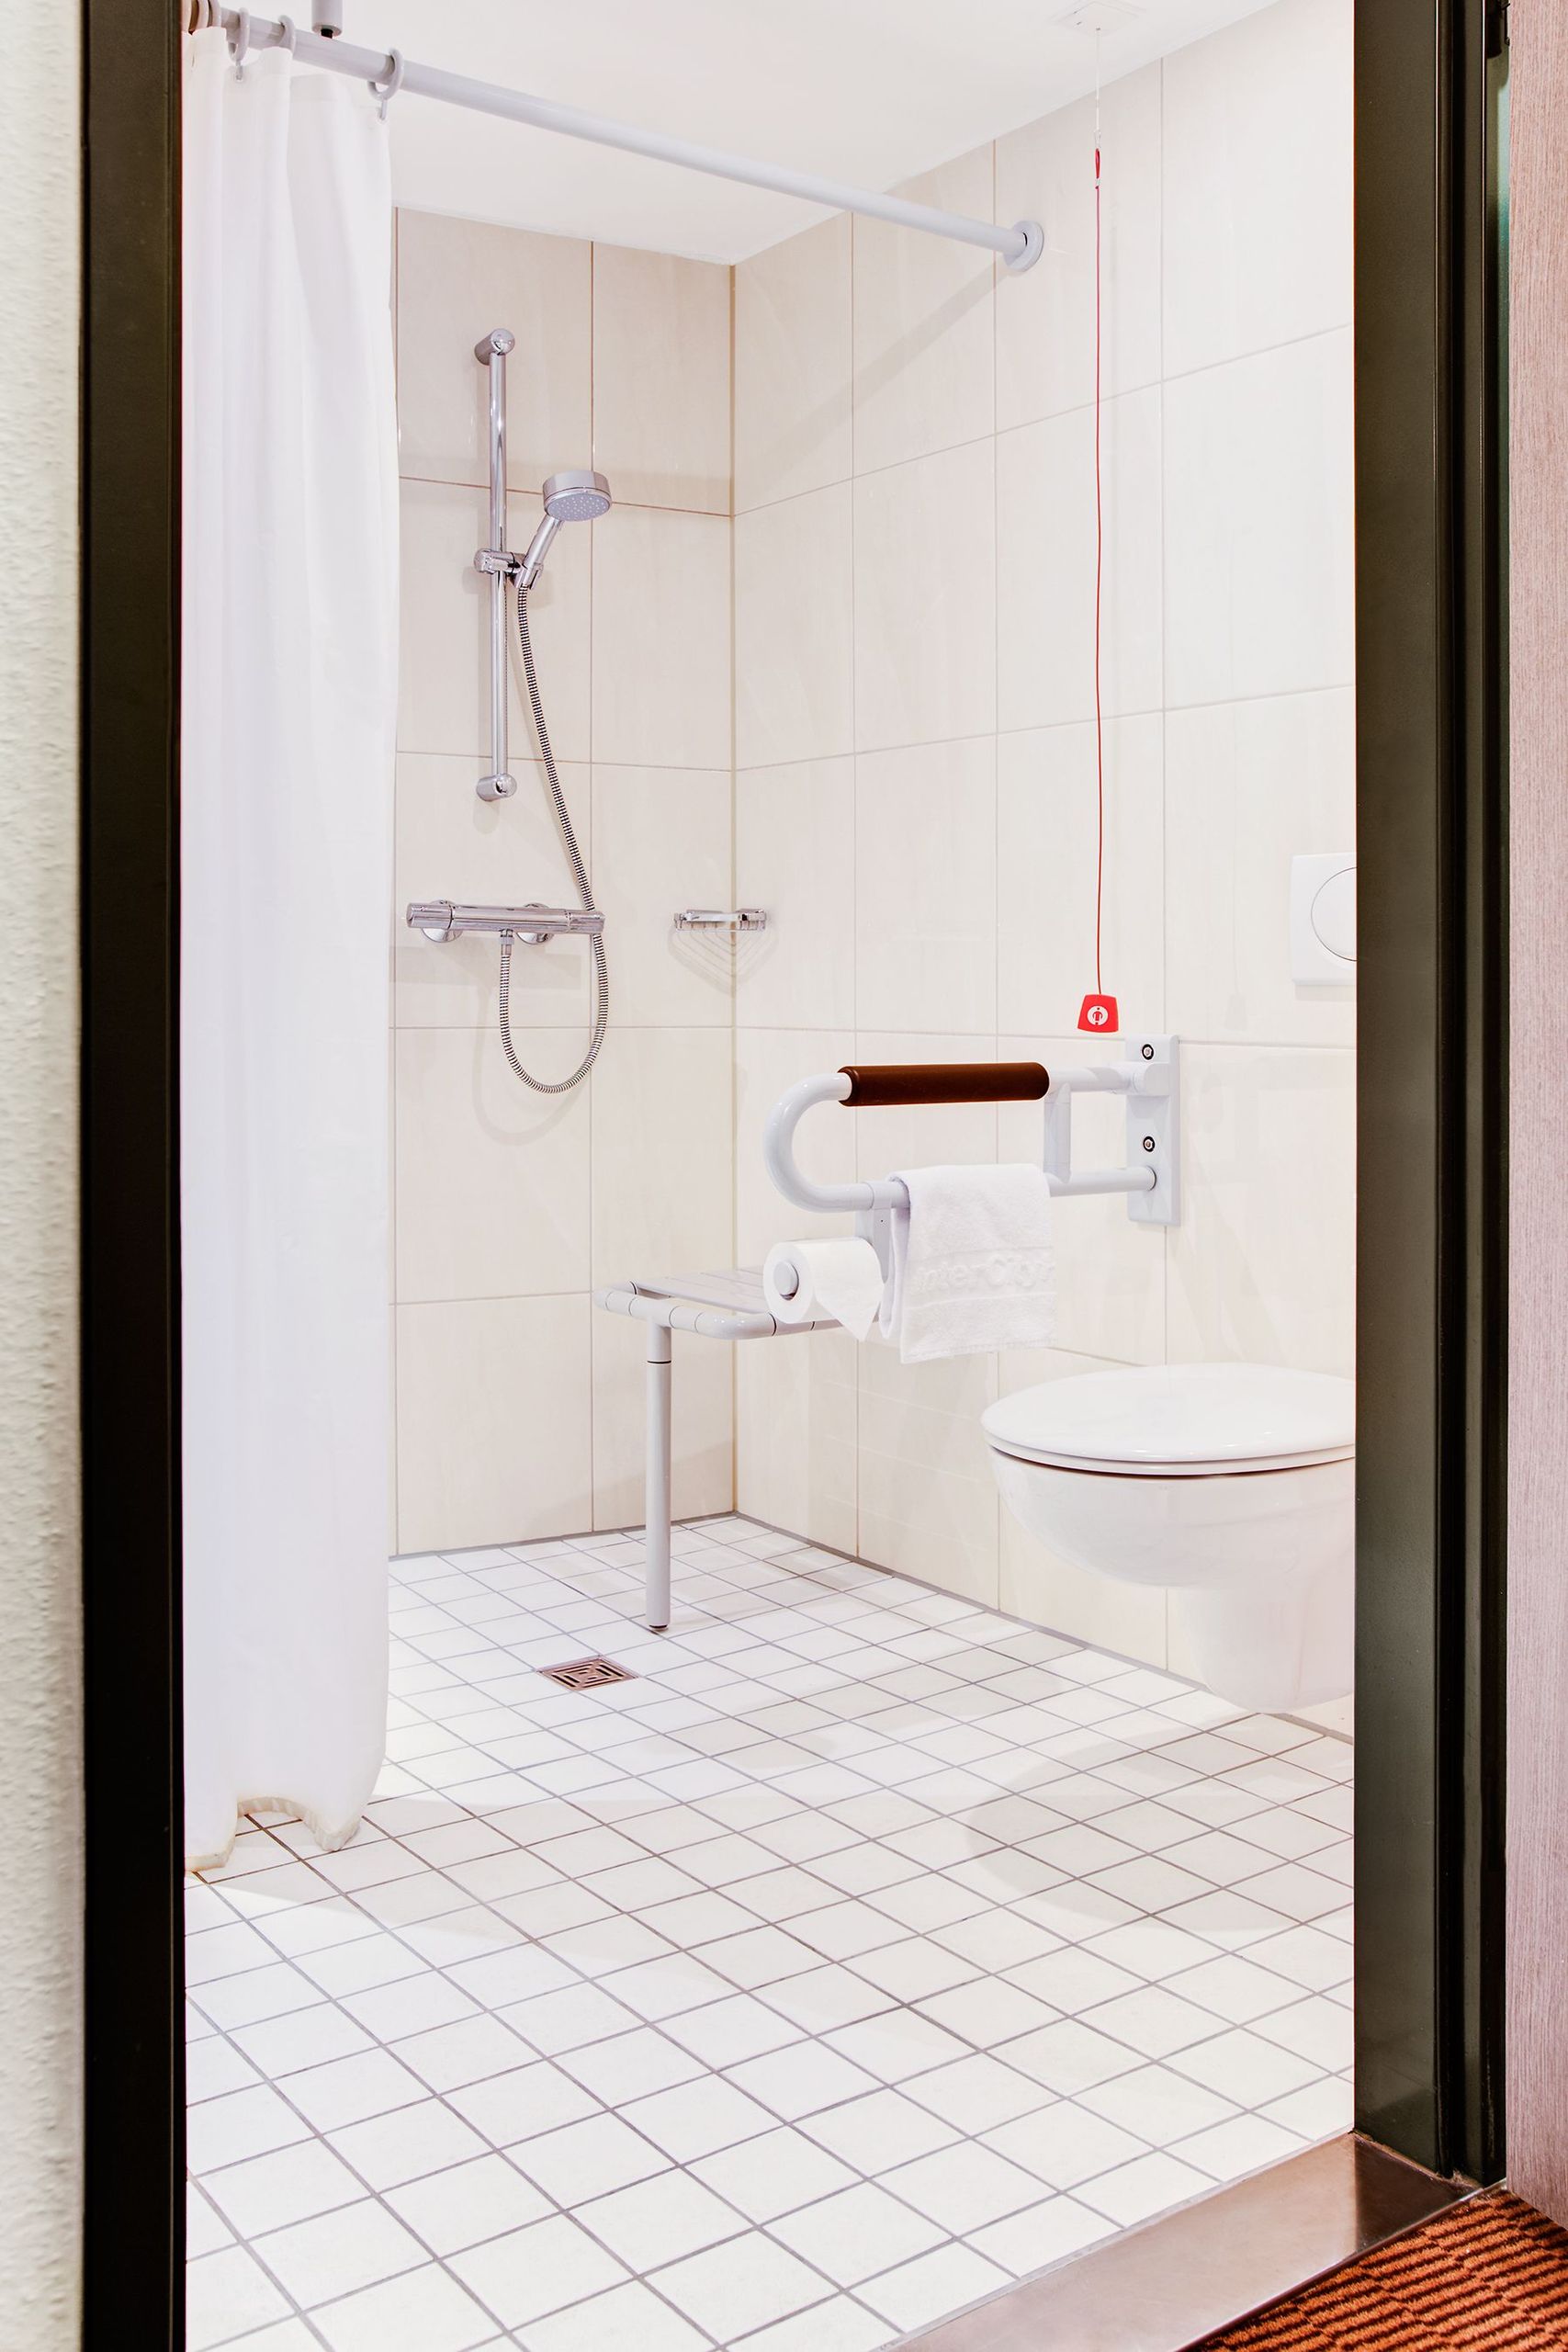 IntercityHotel Mainz - bathroom